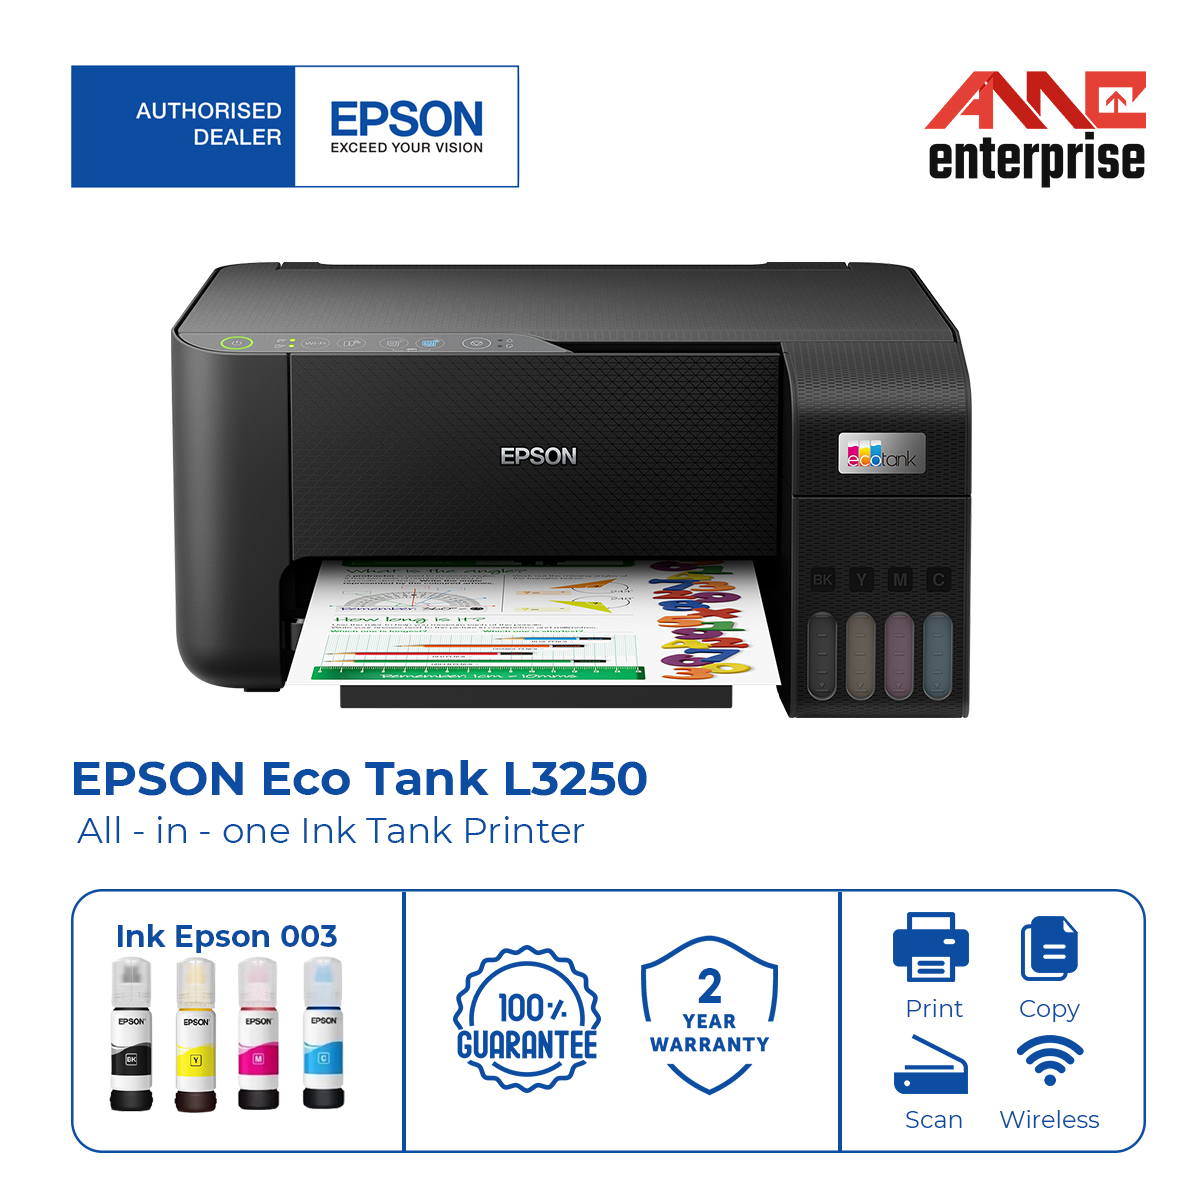 EPSON Eco Tank L3250